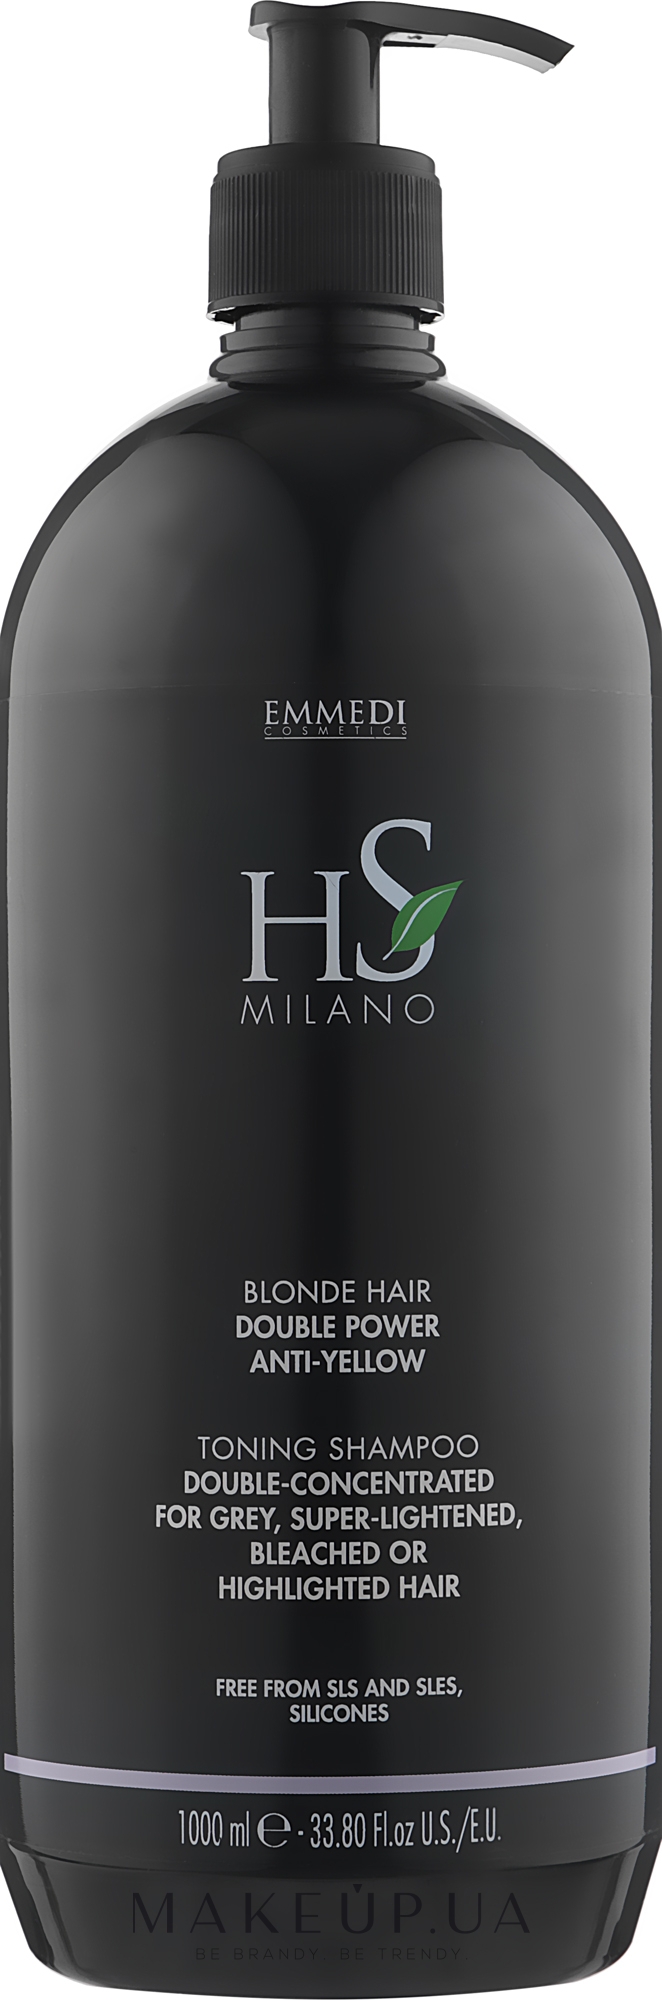 Антижовтий шампунь для блондинок - HS Milano Blonde Hair Double Power Anti-Yellow Shampoo — фото 1000ml